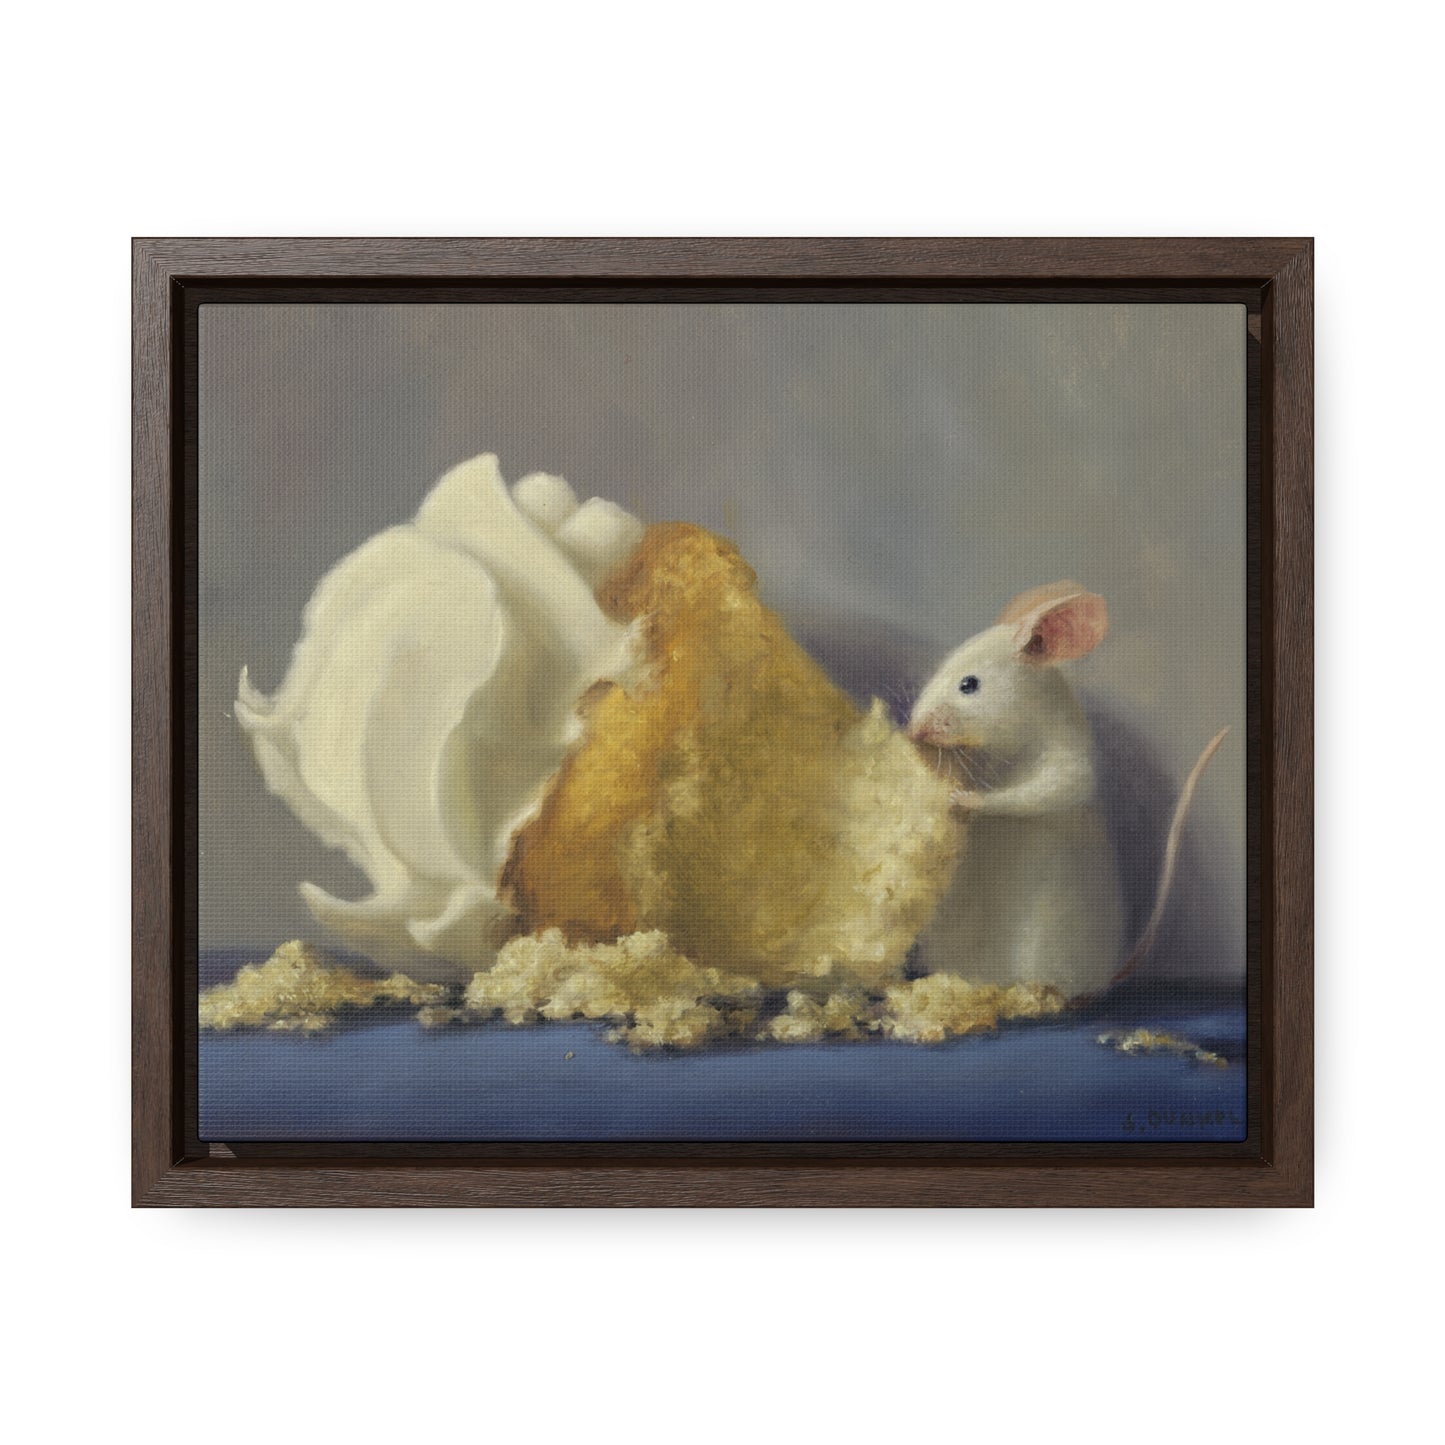 Stuart Dunkel: "Naughty Mouse" - Framed Canvas Reproduction